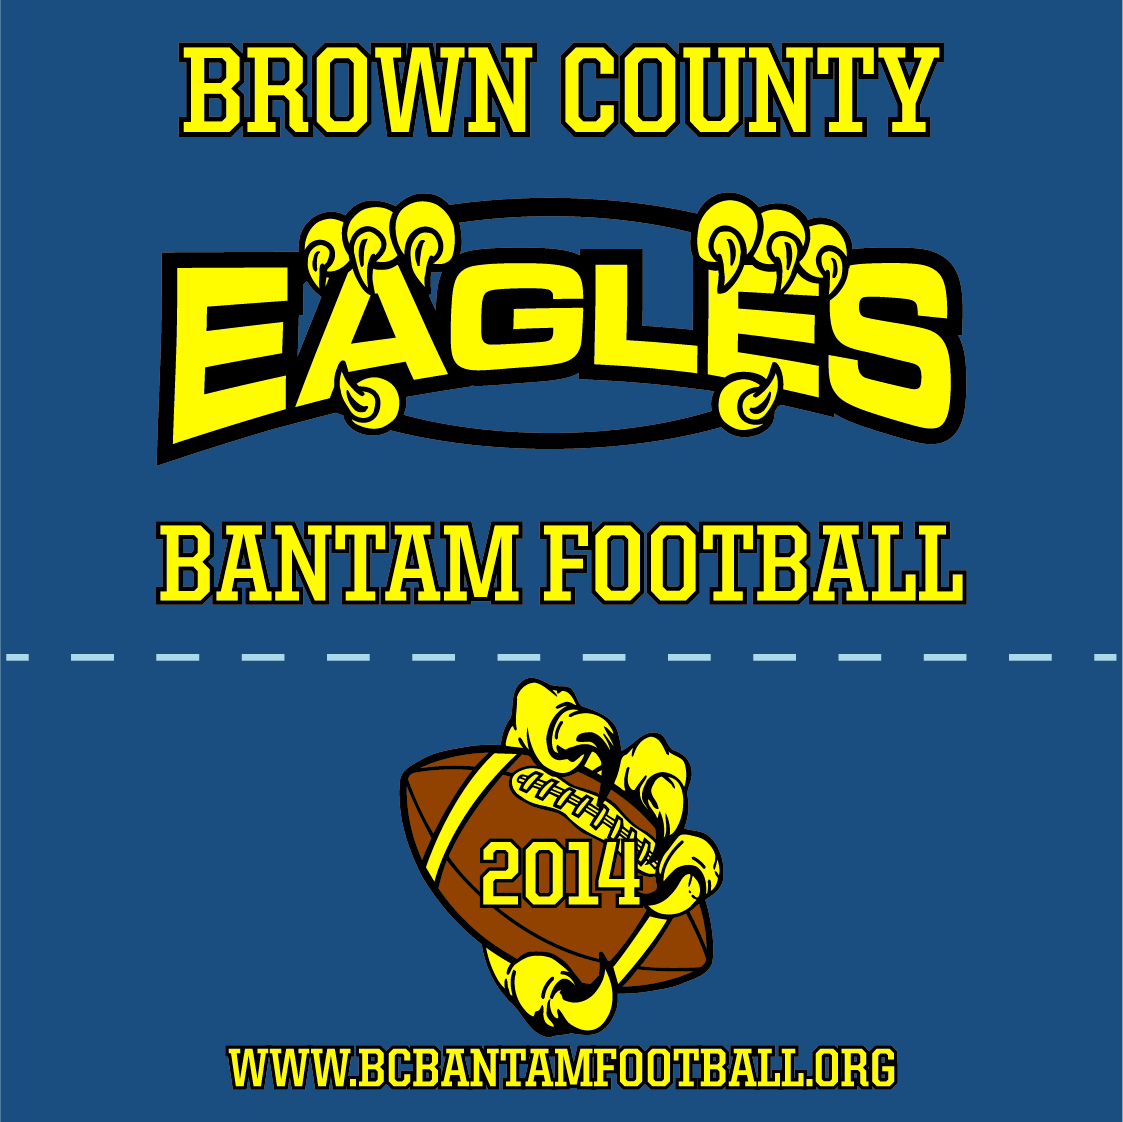 Brown County Bantam Football League 2014 T-Shirt Fundraiser shirt design - zoomed